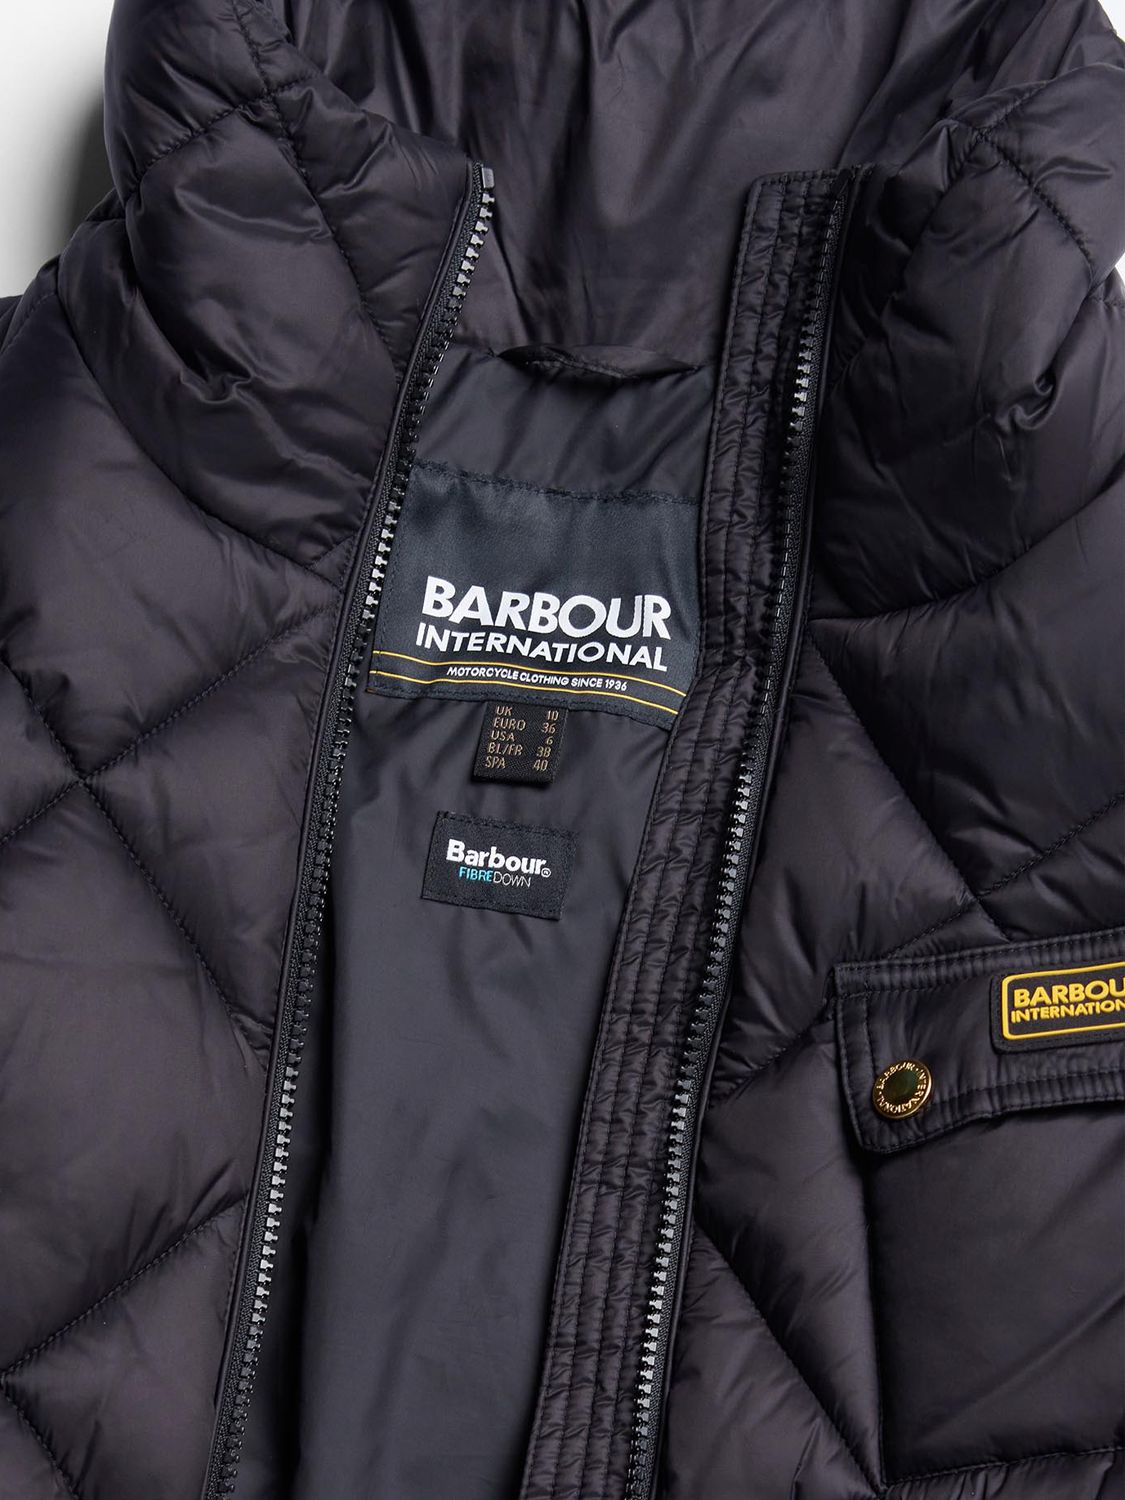 Barbour International Aurora Quilted Jacket, Black at John Lewis & Partners